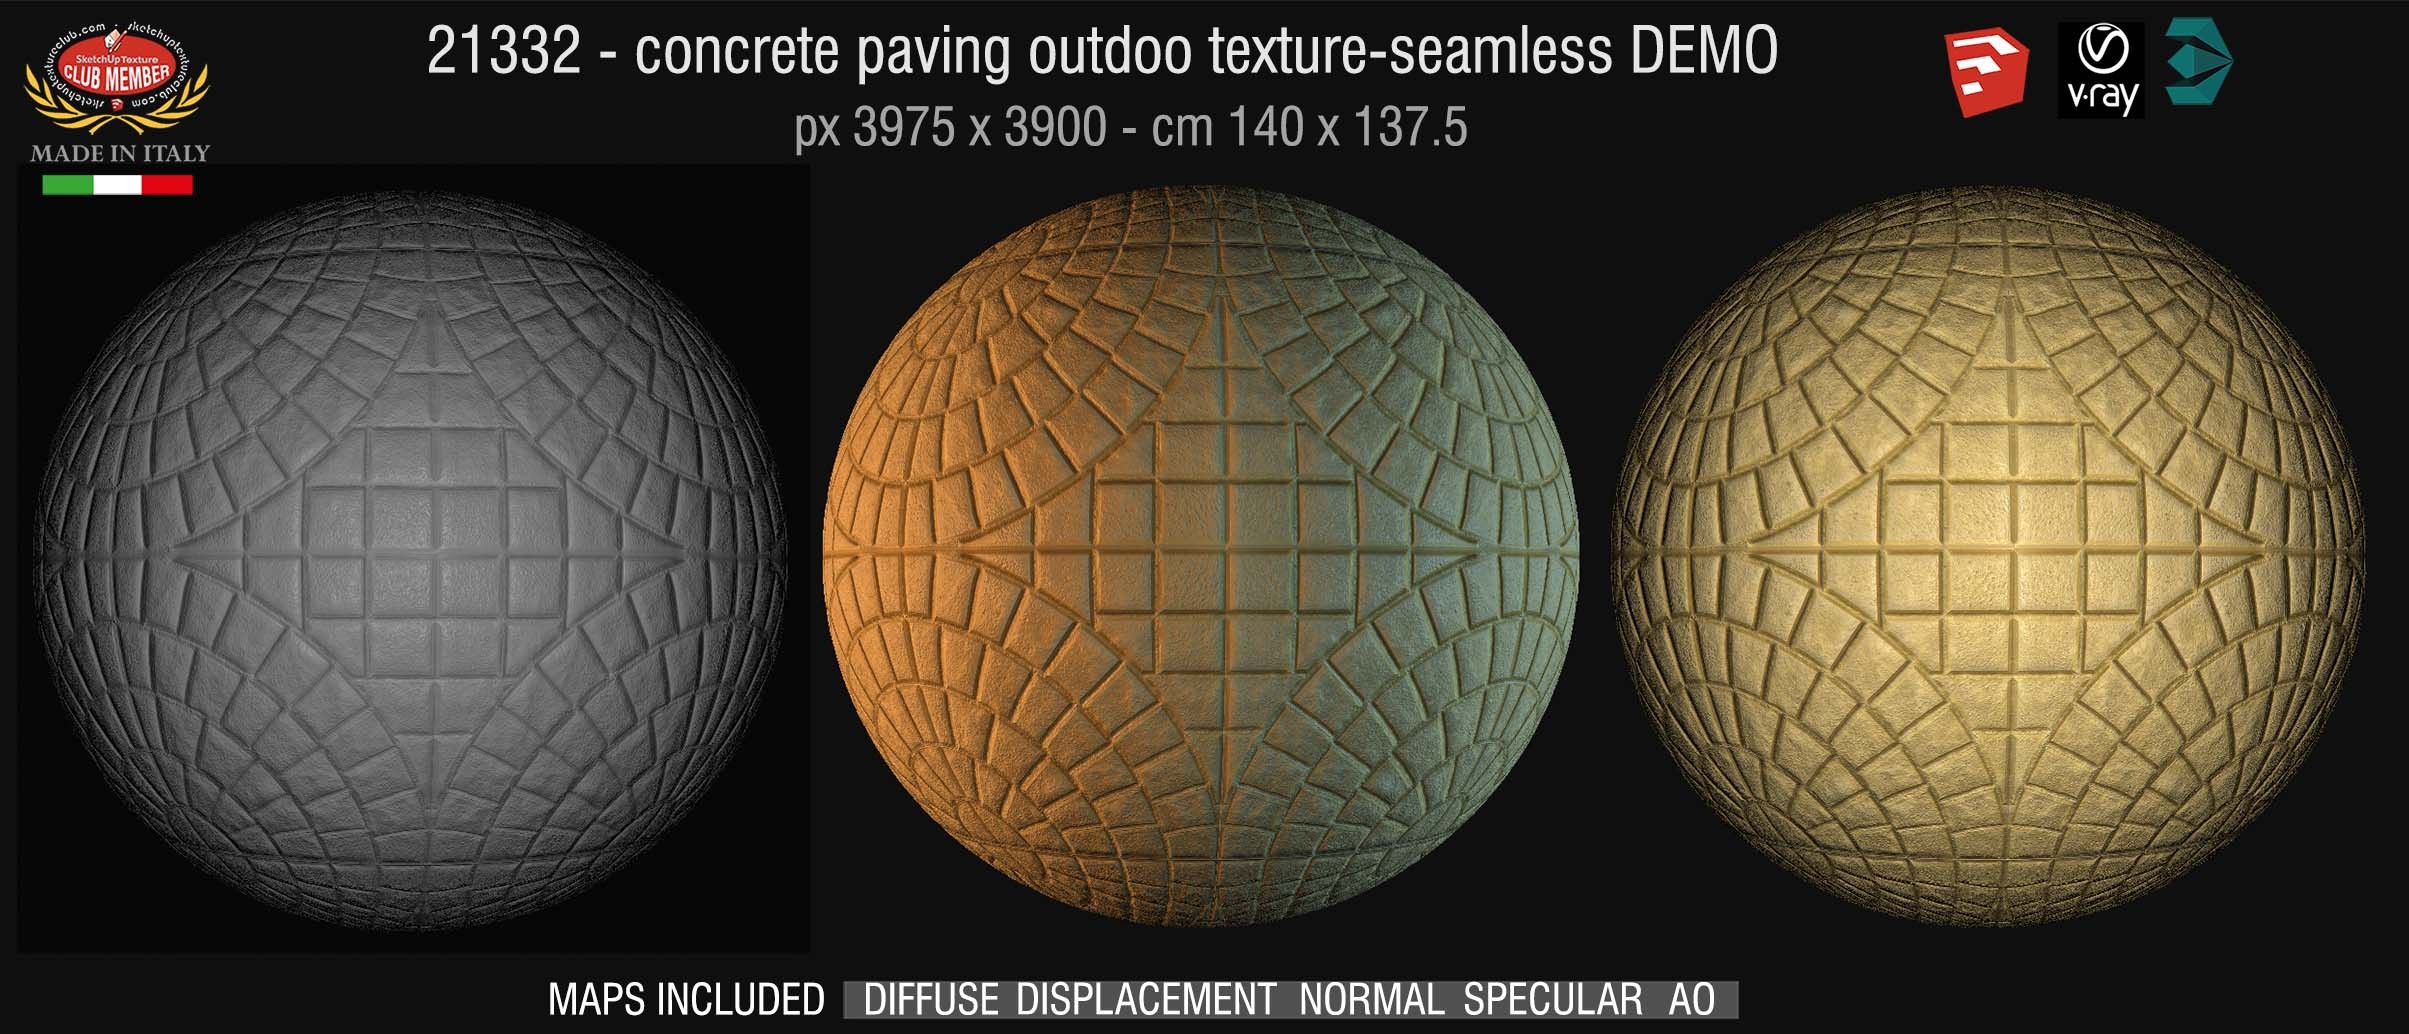 21332 HR concrete paving outdoor texture seamless + maps DEMO